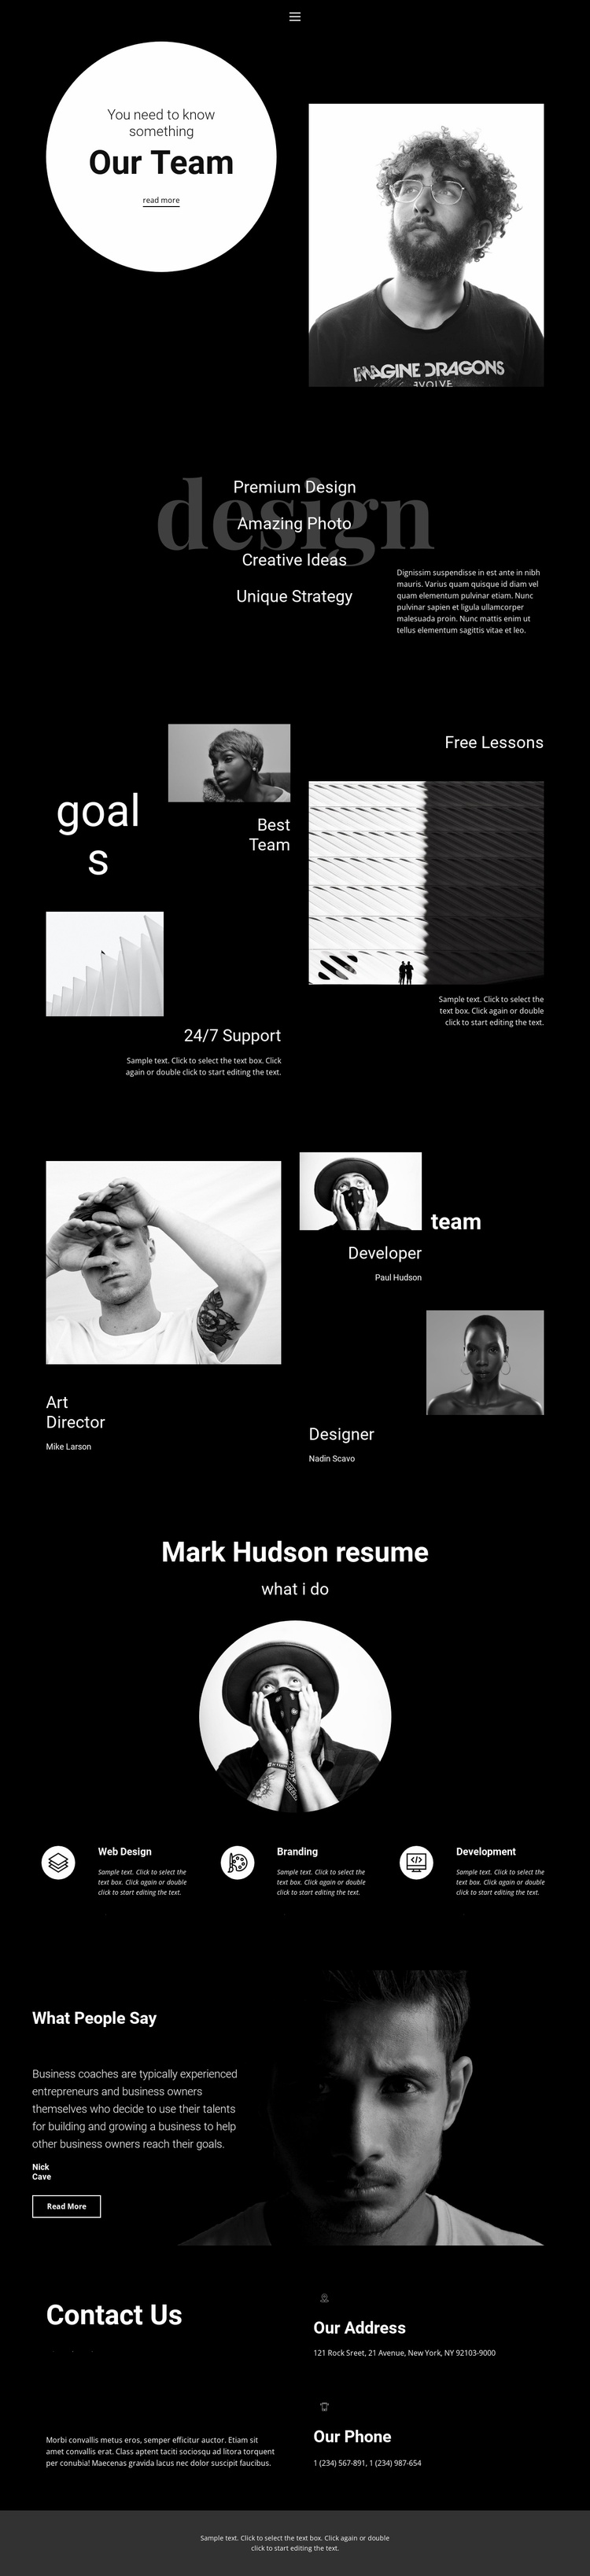 Design and development team Landing Page